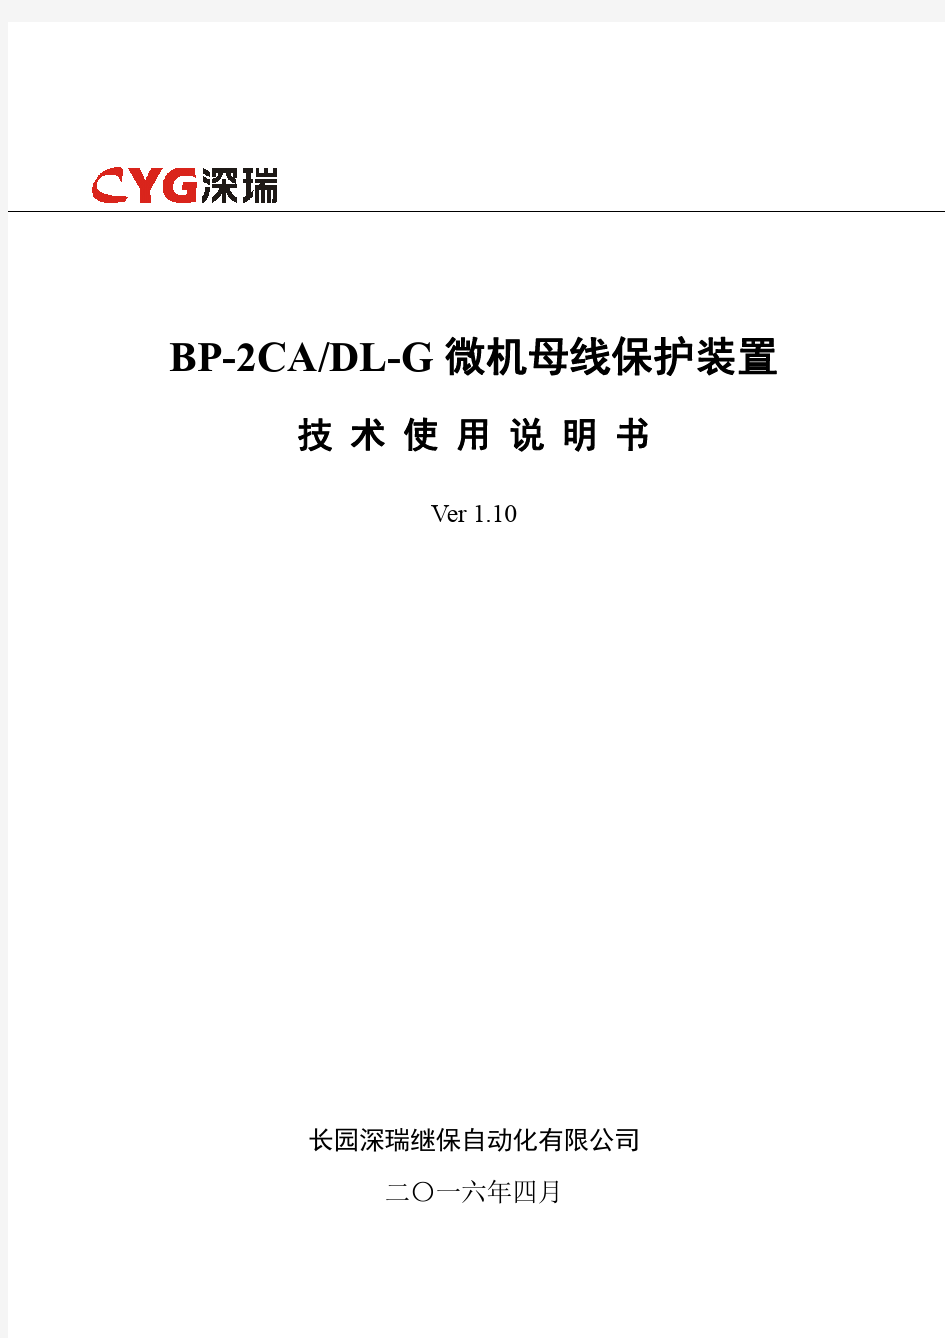 BP-2CA DL-G母线保护装置技术使用说明书